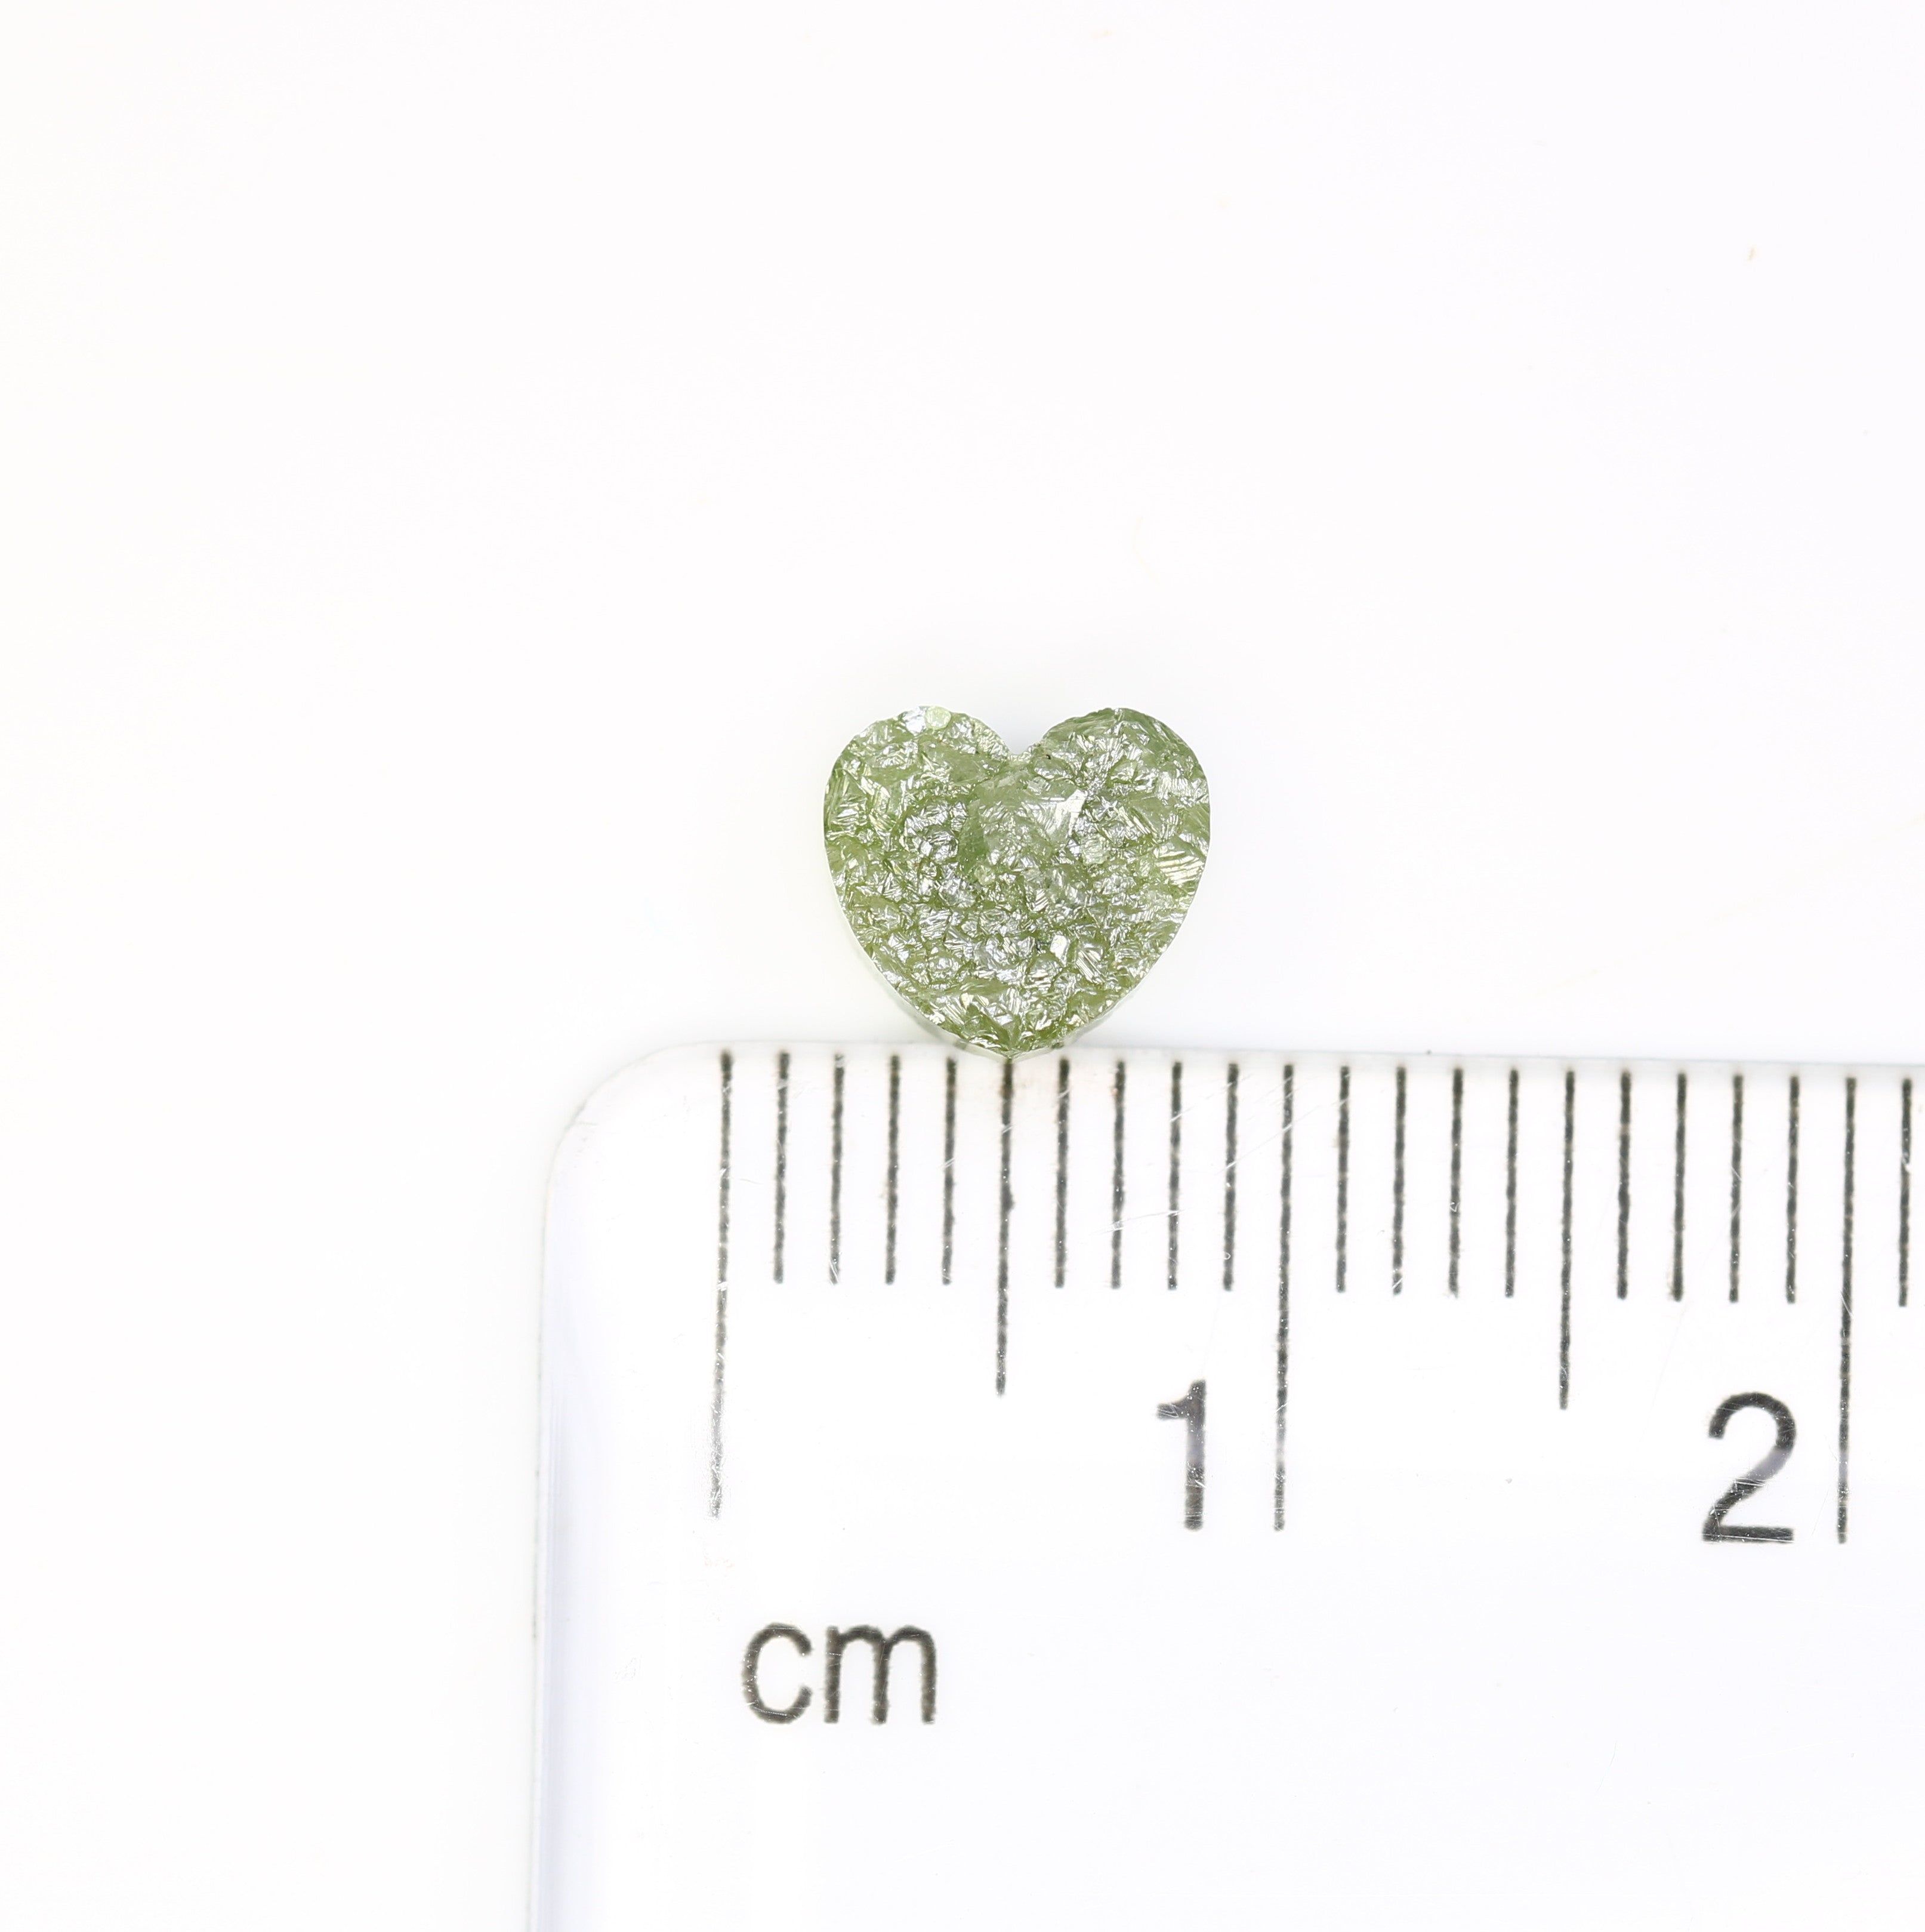 1.16 Carat Green Color Loose Fancy Heart Shape Diamond For Wedding Ring